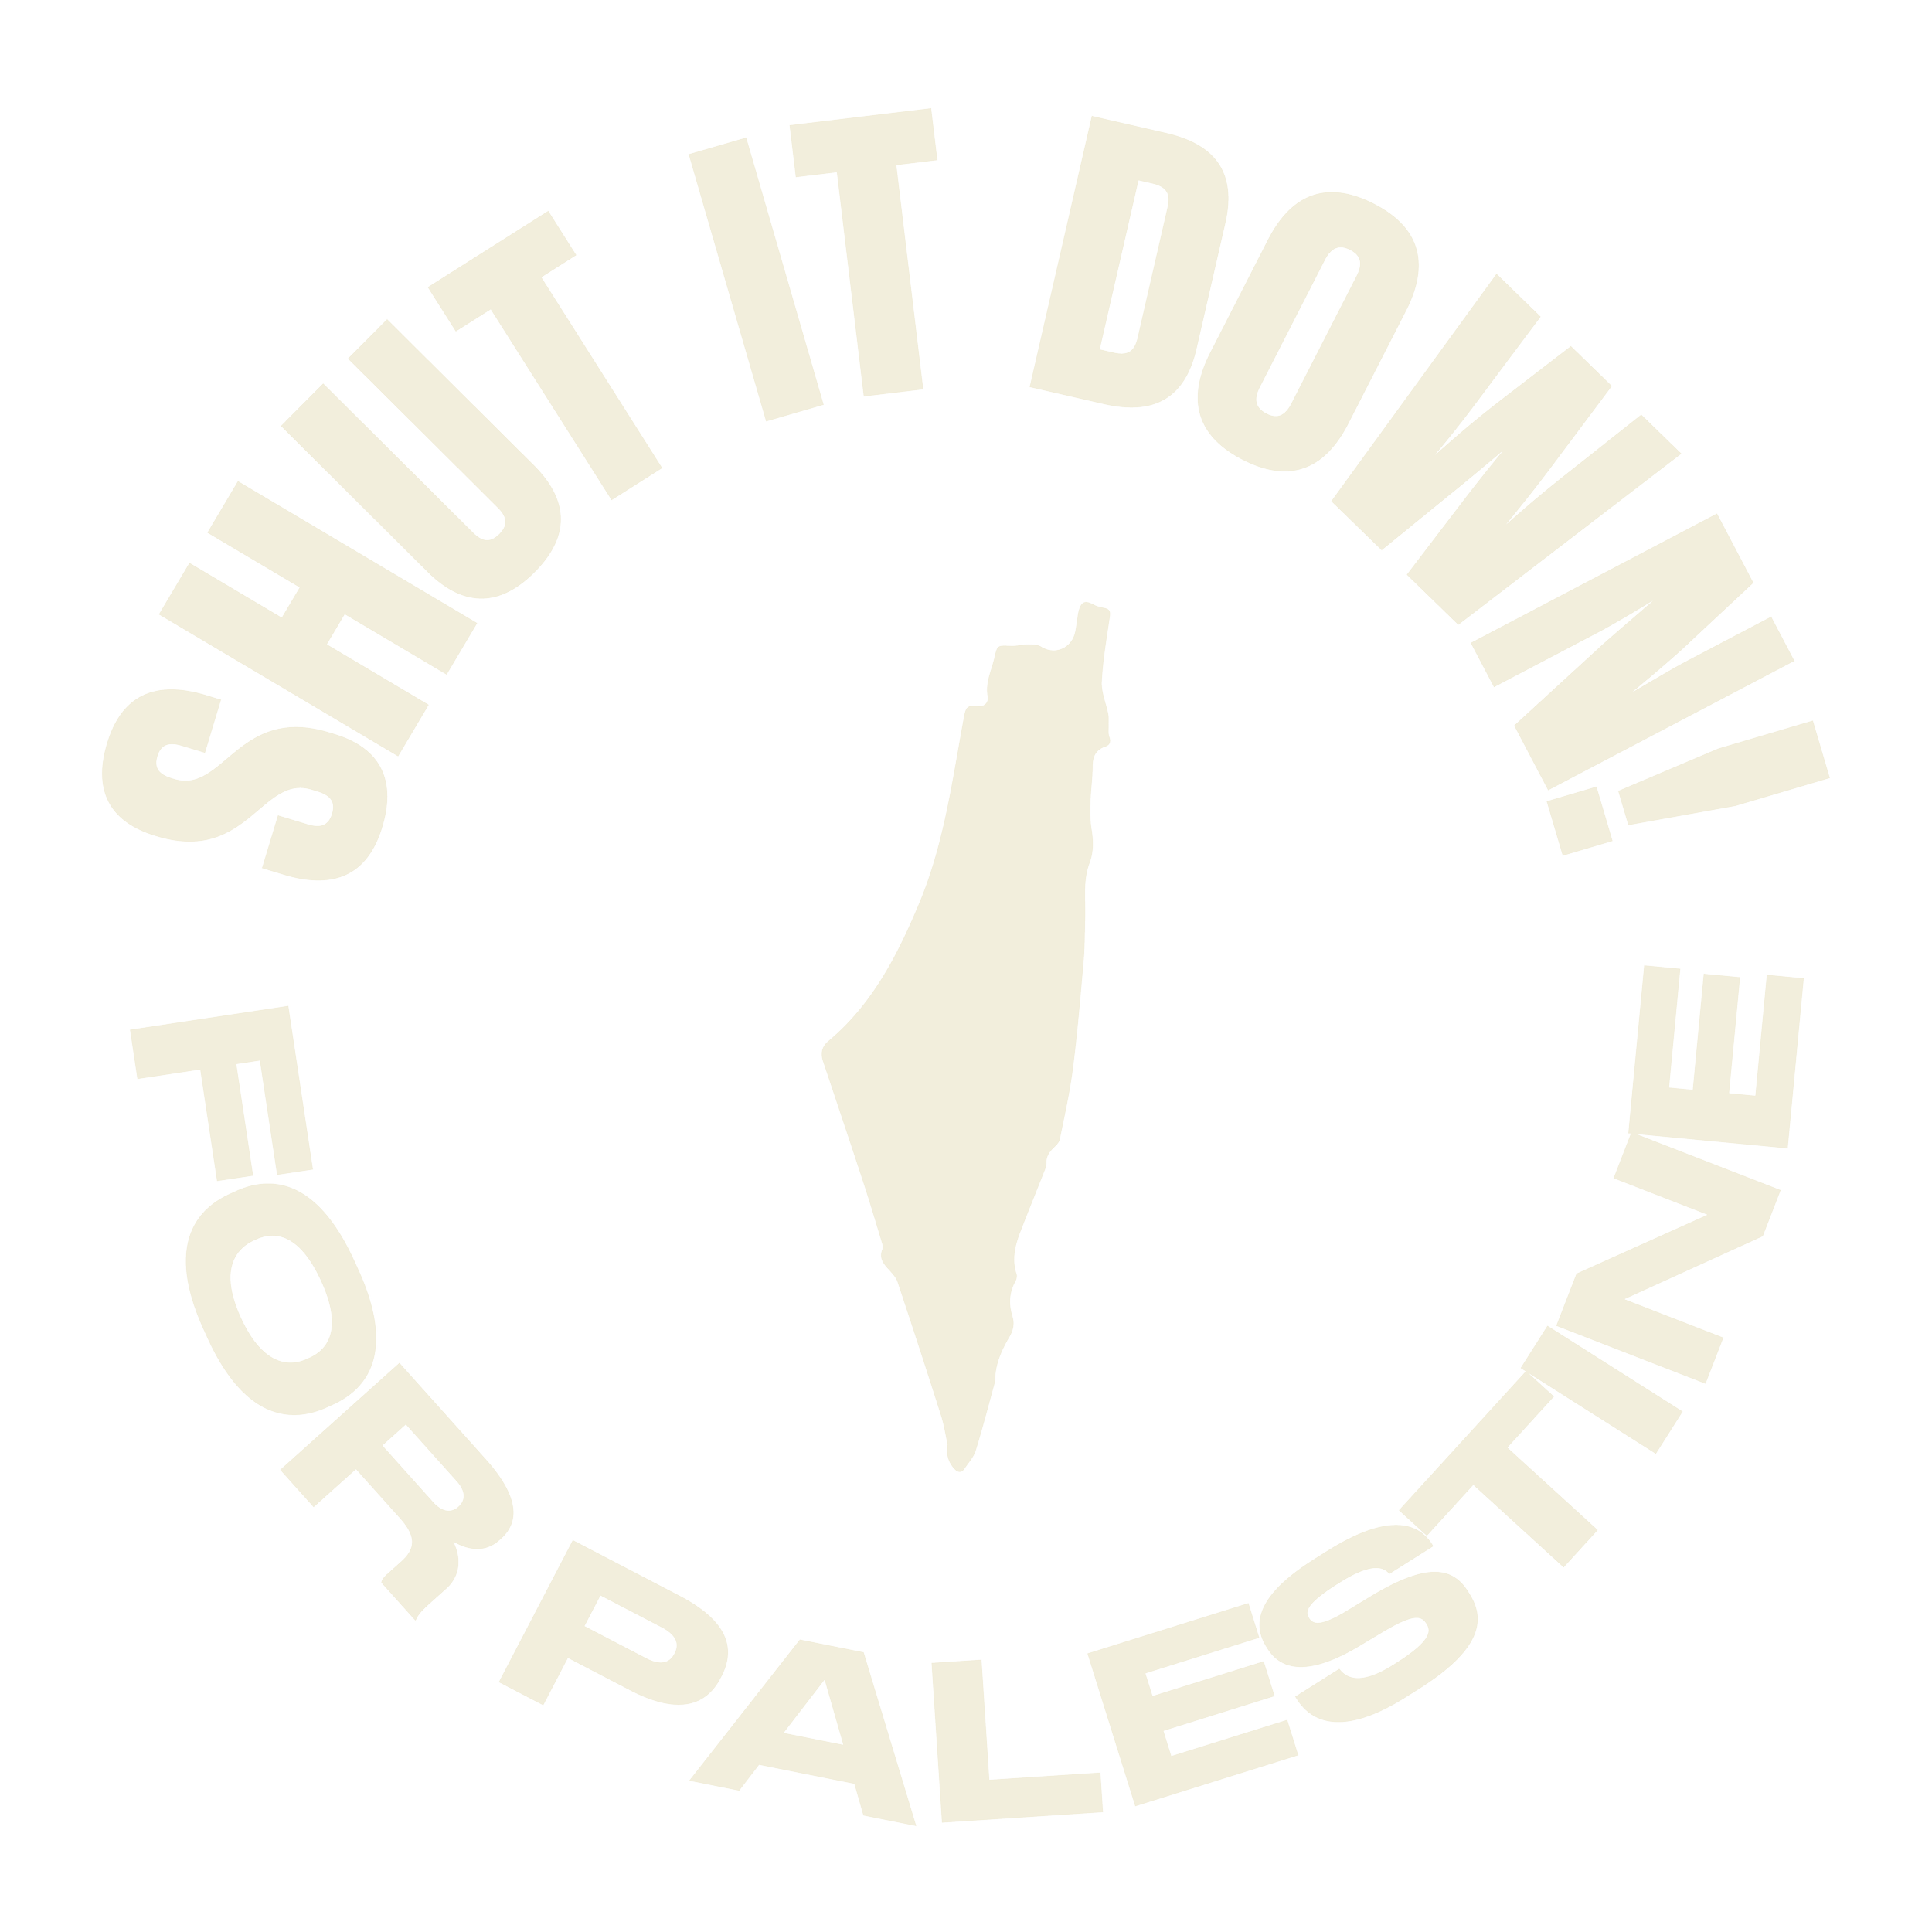 Shut It Down for Palestine - March 30